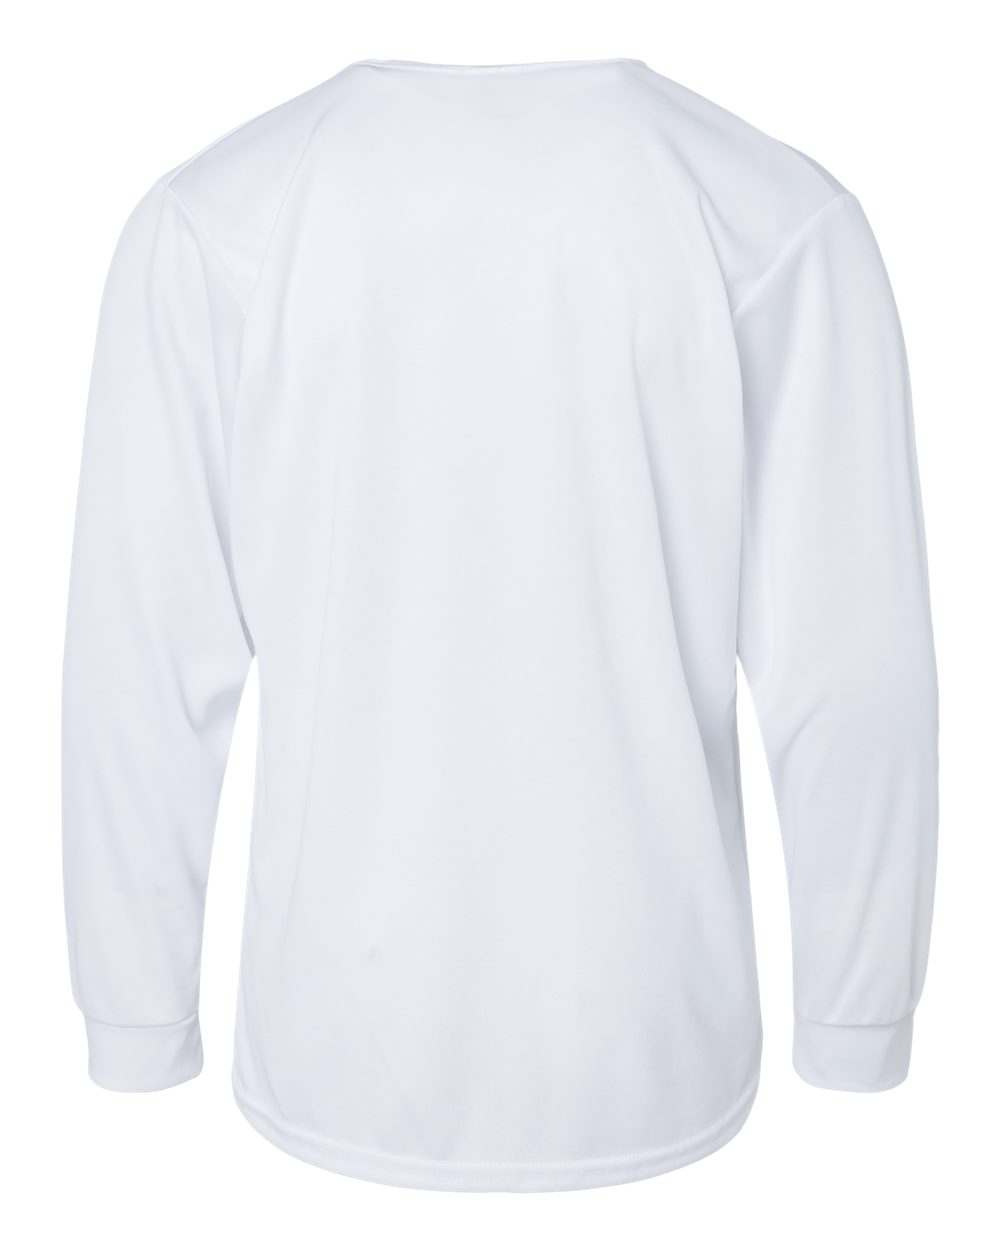 C2 Sport 5204 - Youth Performance Long Sleeve T-Shirt